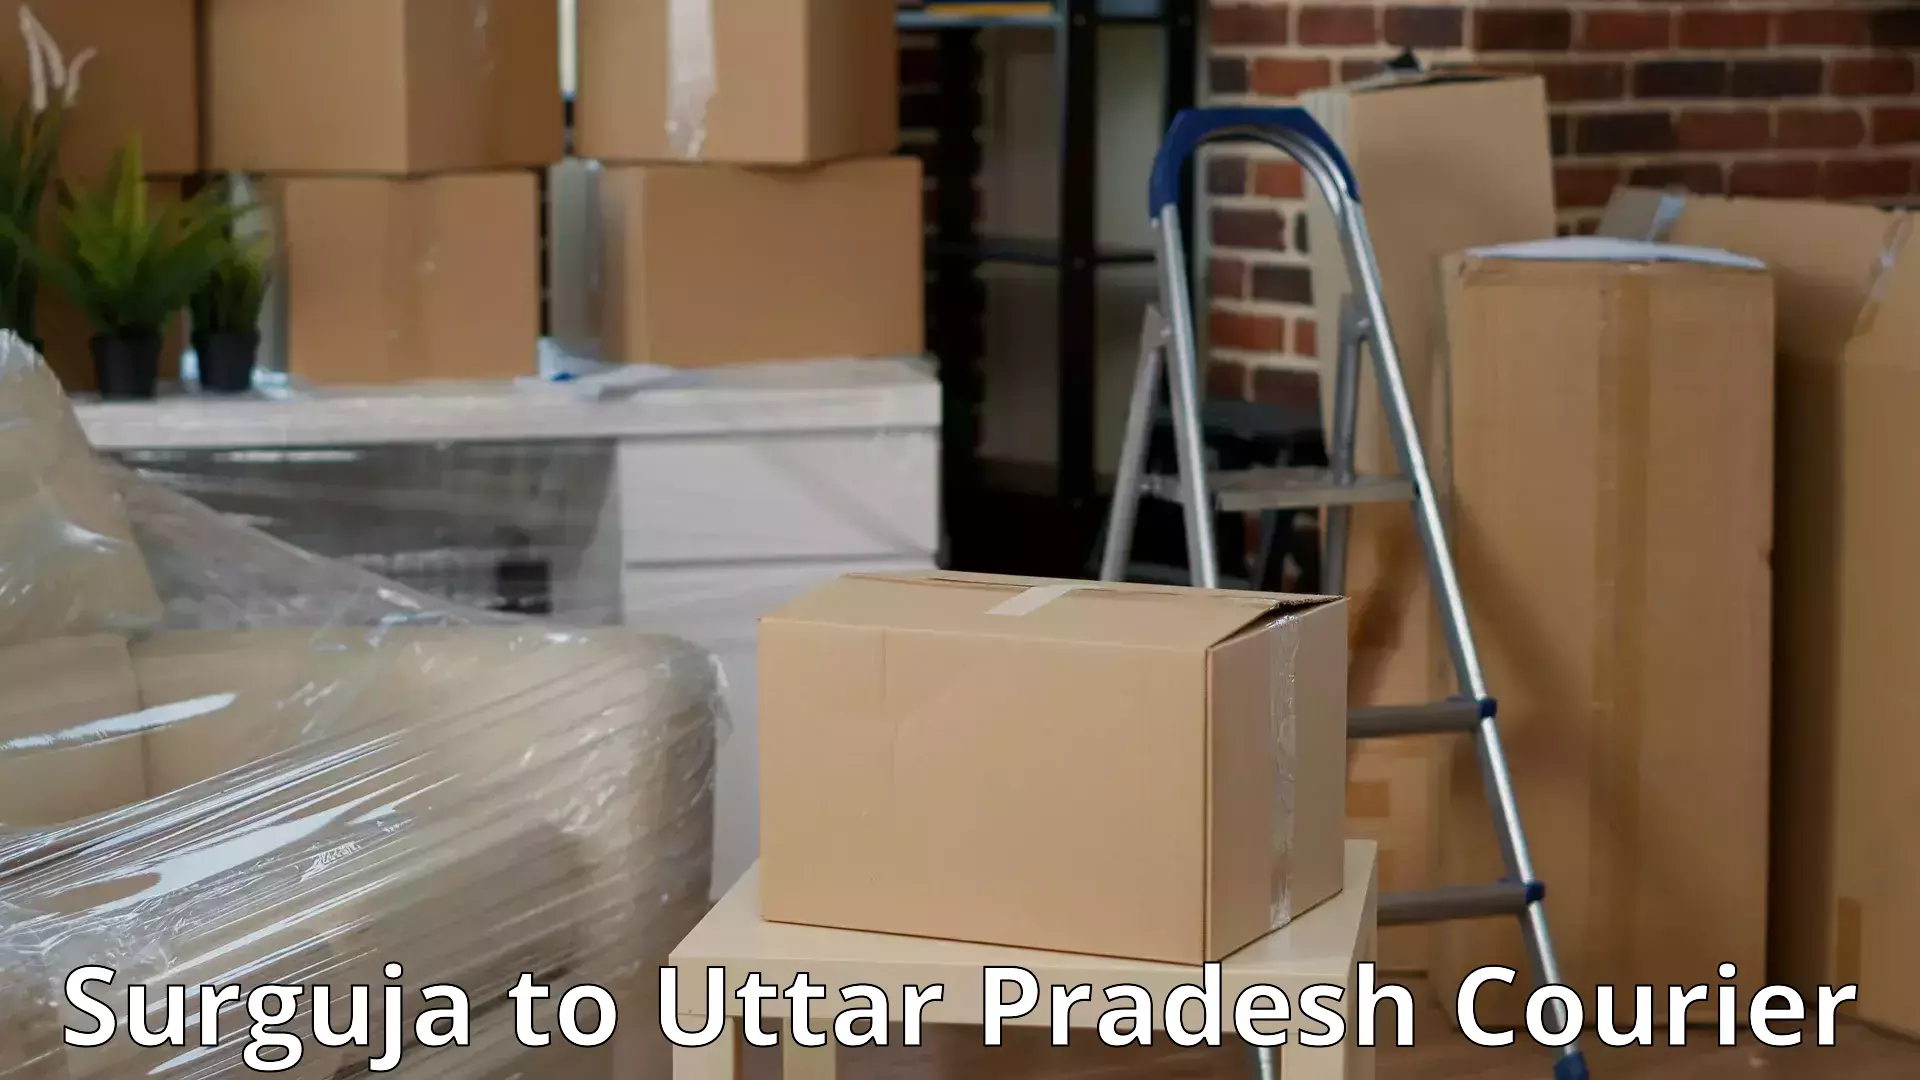 Quality moving company Surguja to Mathura